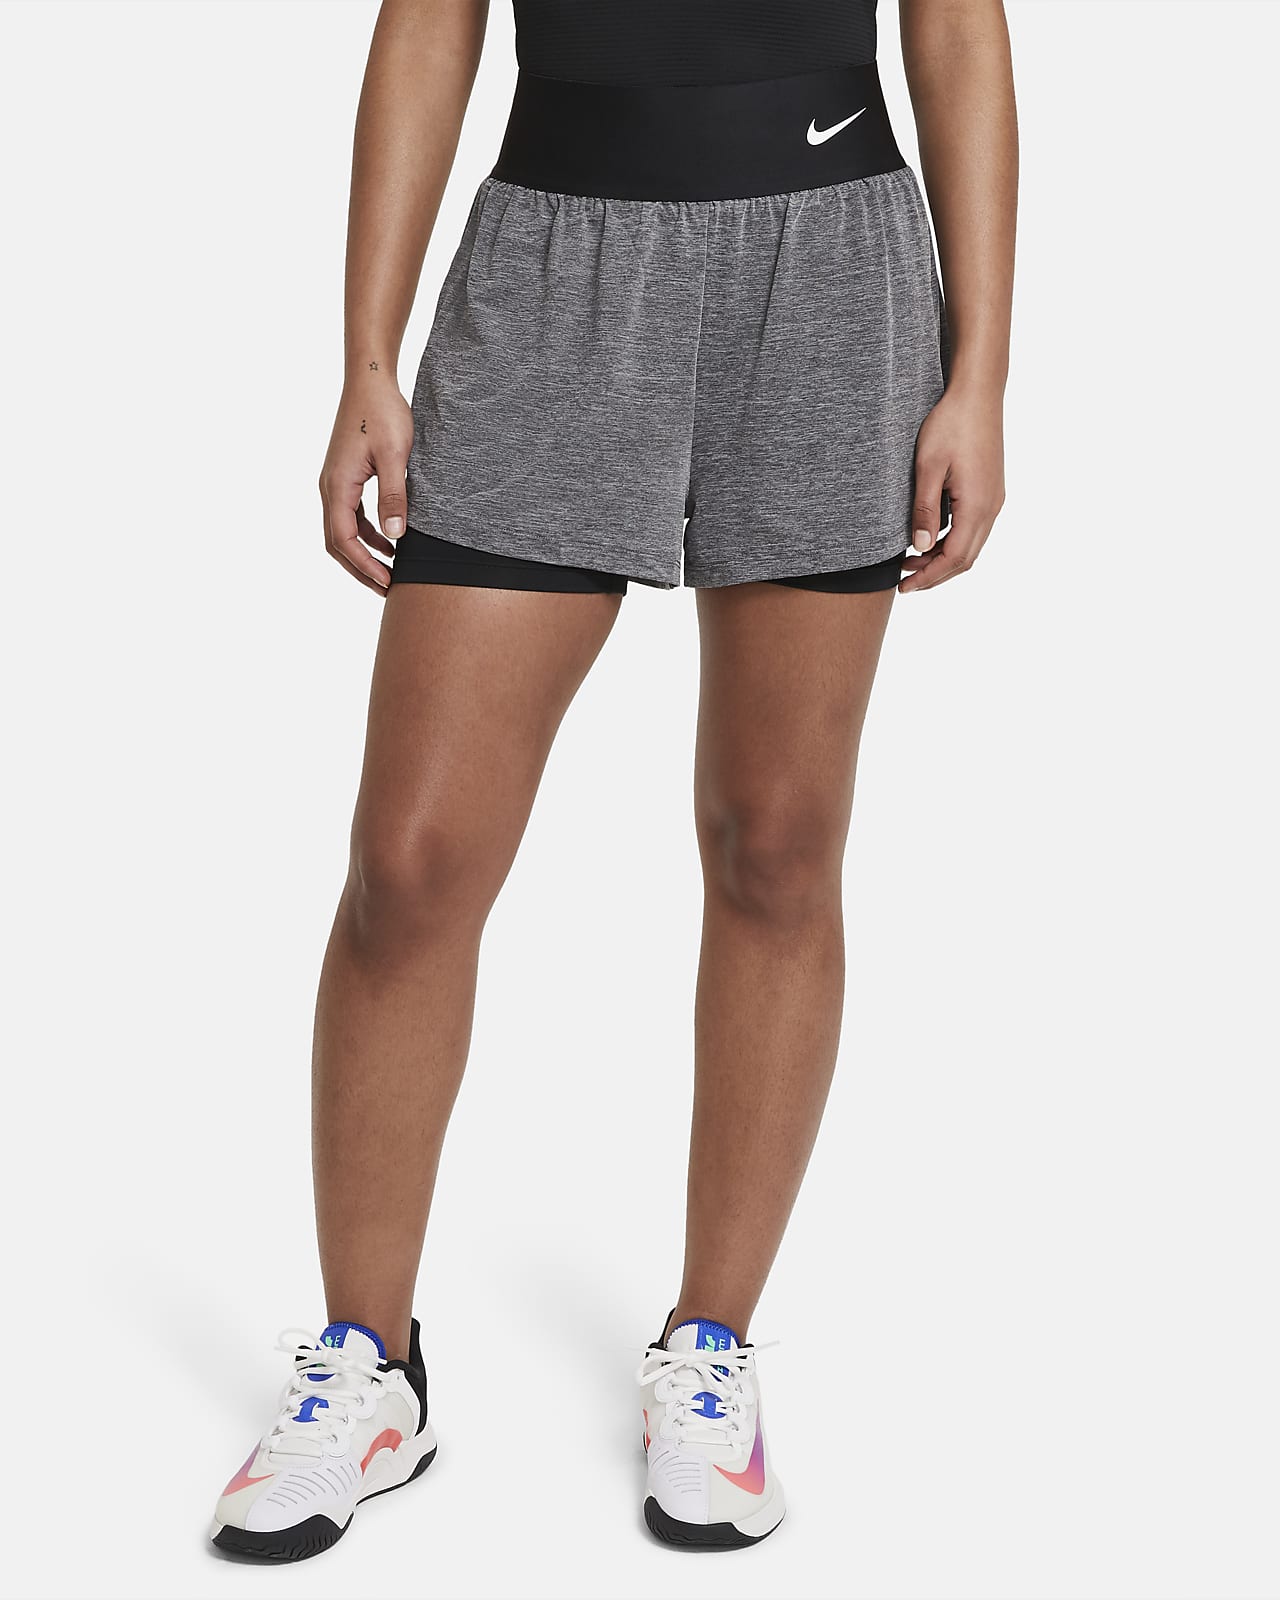 NikeCourt Advantage Women's Tennis Shorts. Nike SA